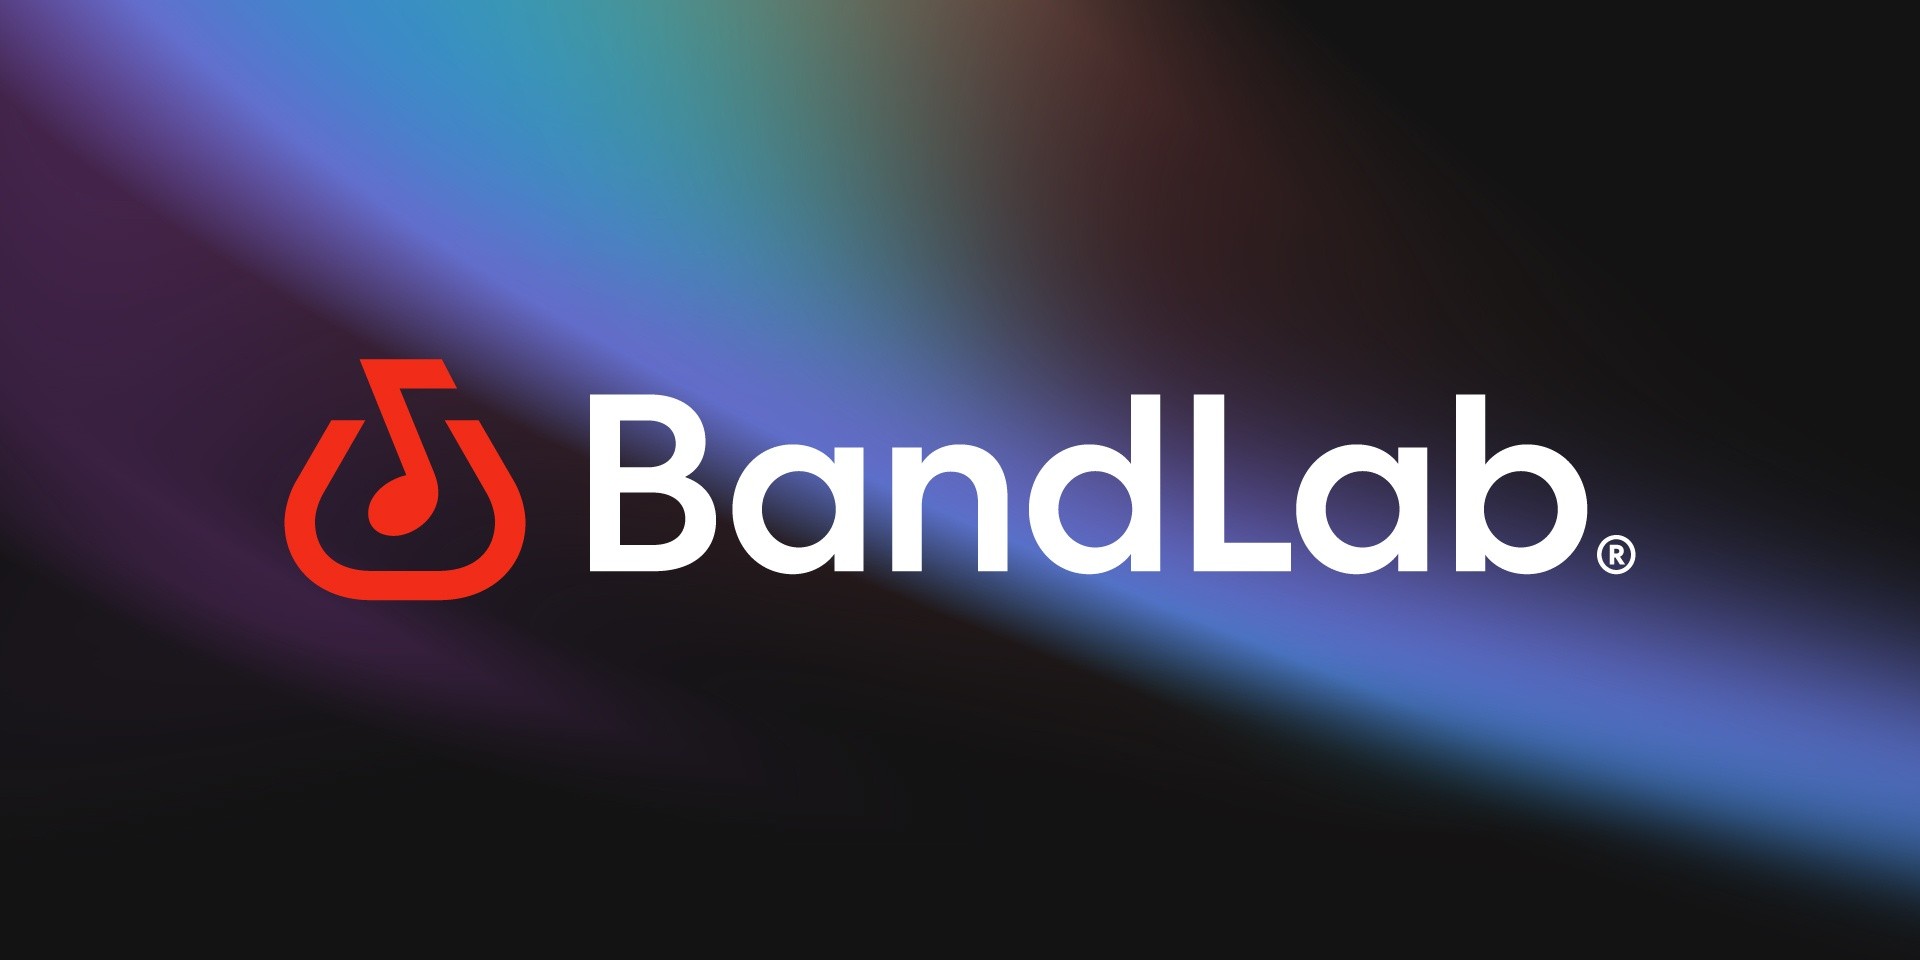 BandLab raises $65 million in Series B funding, partners with Prosus Ventures